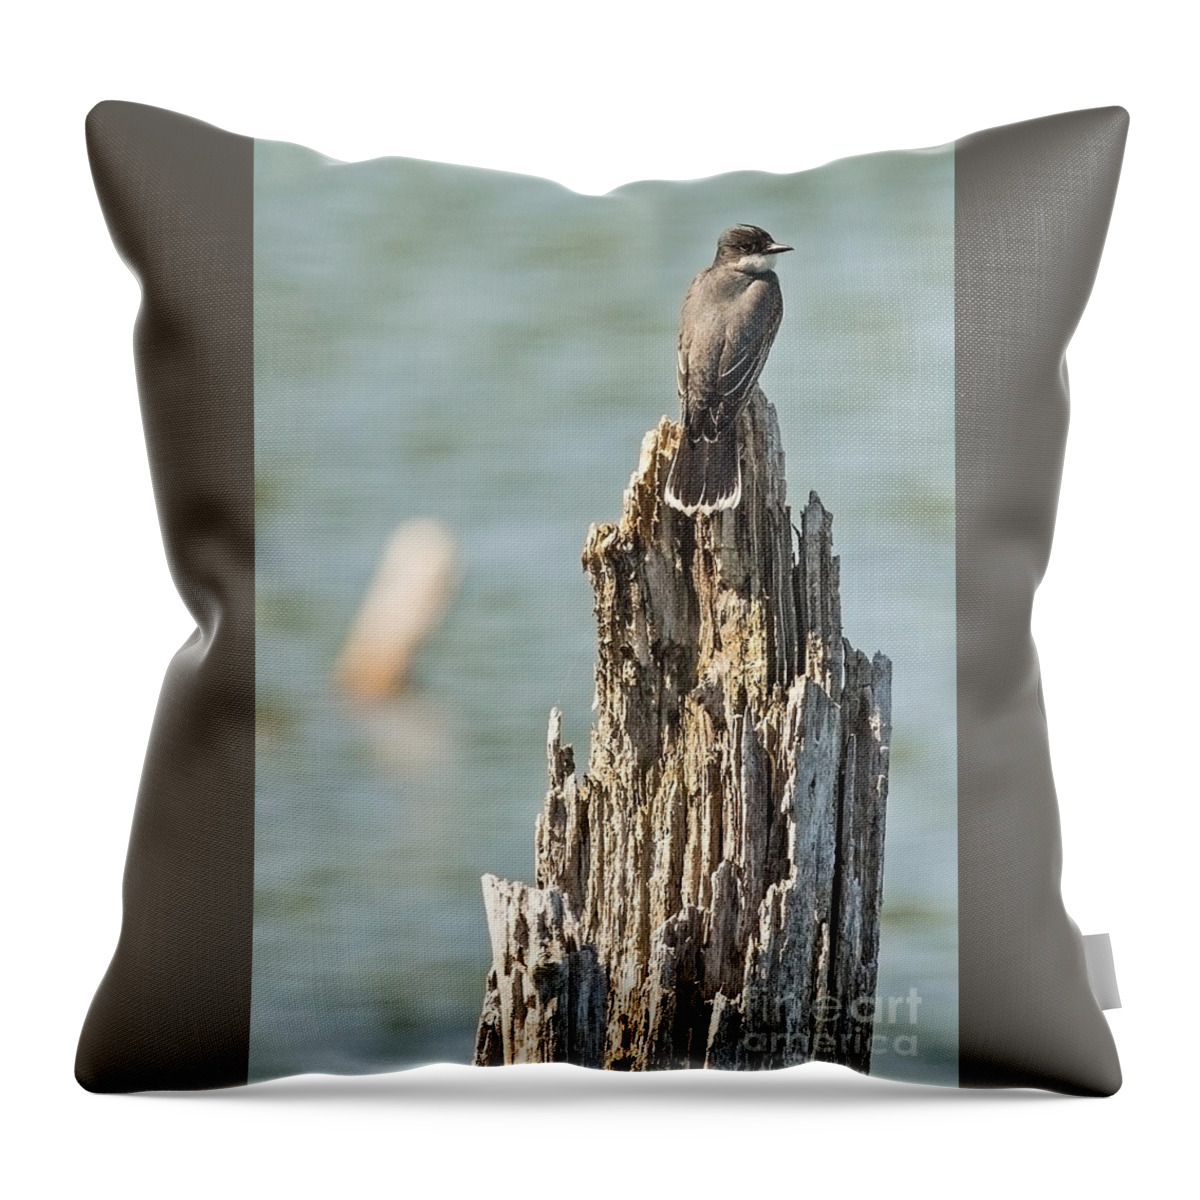 King Bird Throw Pillow featuring the photograph Minnesota King Bird by Natural Focal Point Photography